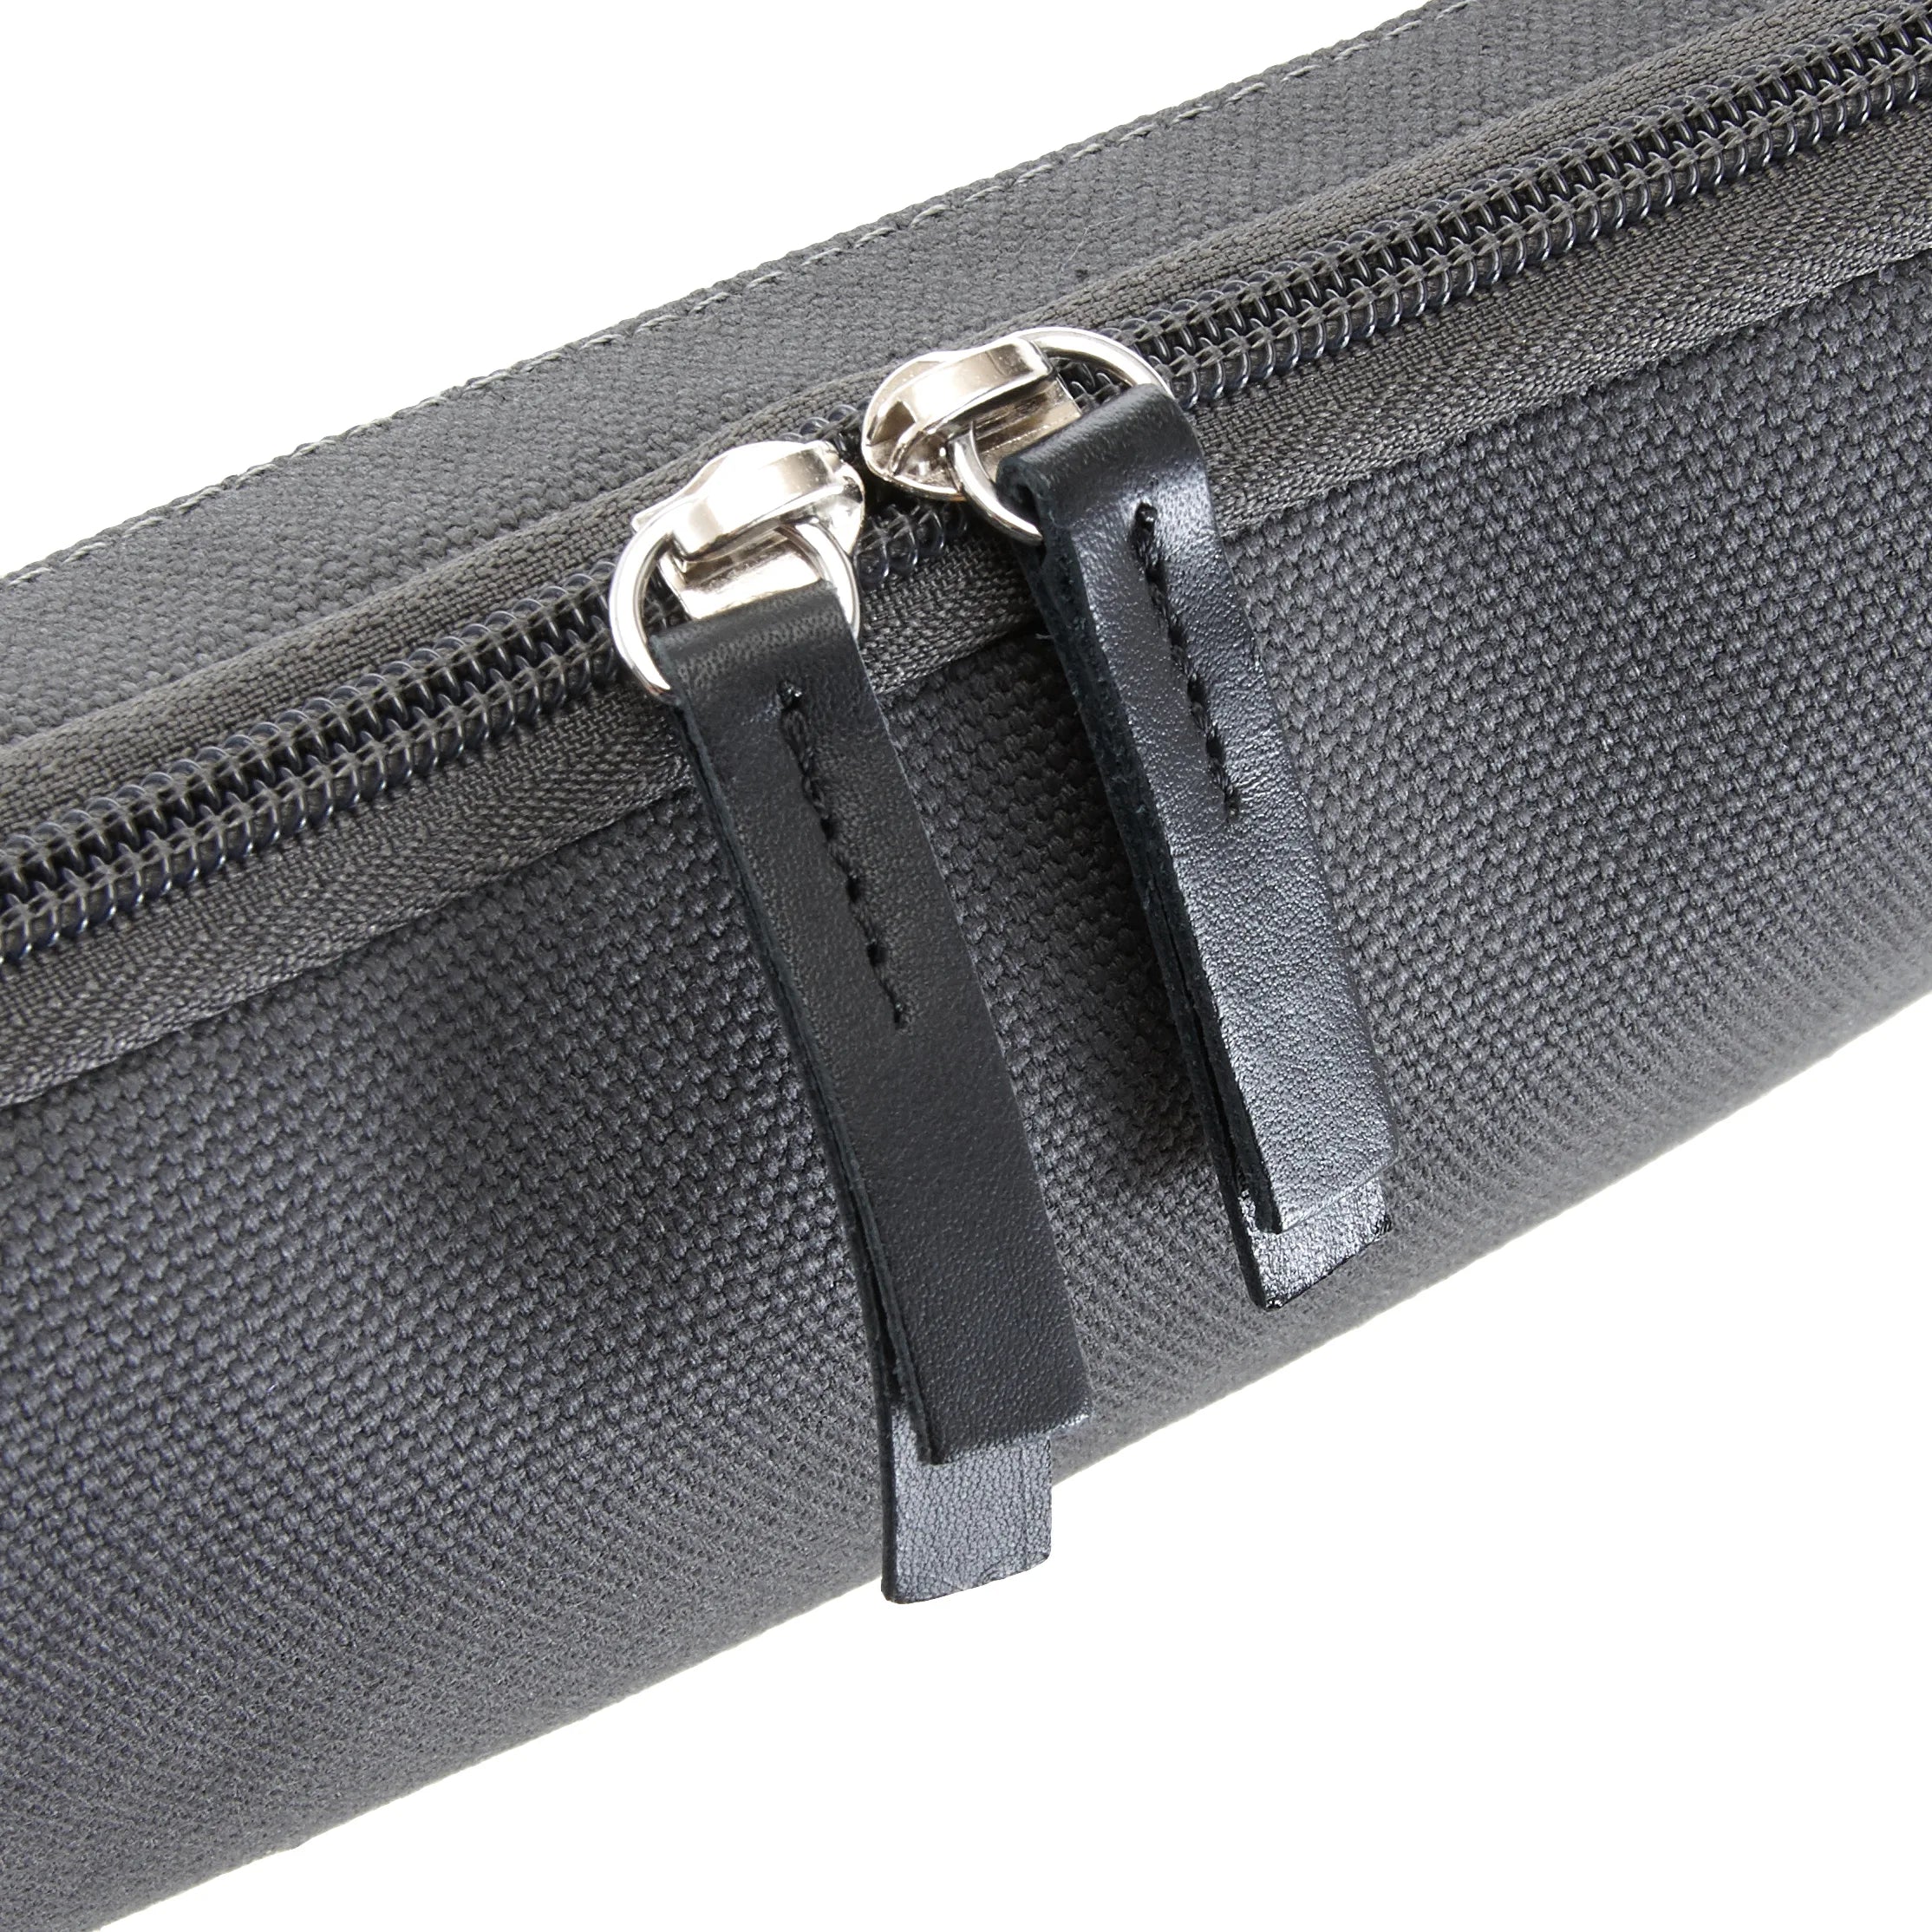 Jost Lund Crossover Bag 28 cm - gray